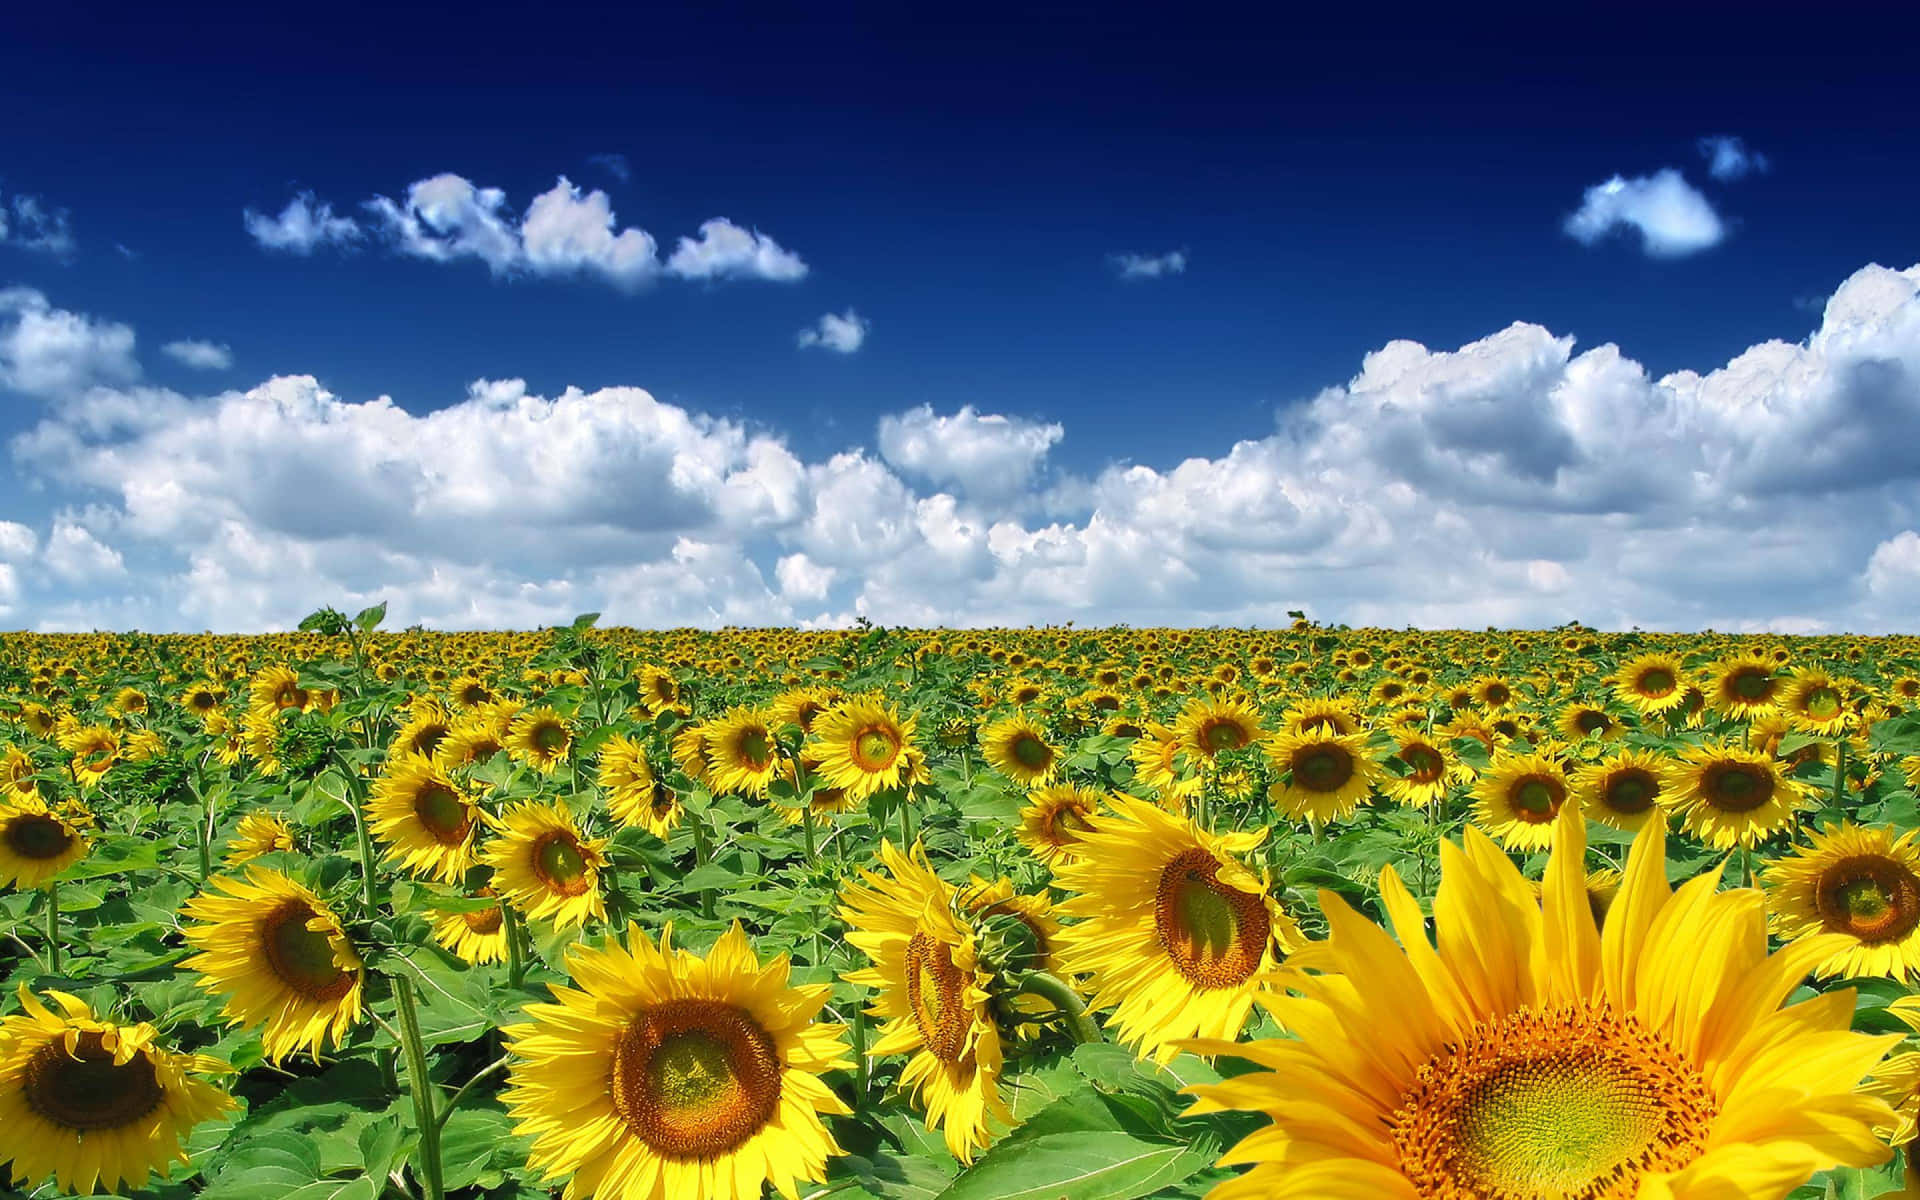 sunflowers in a field under a blue sky